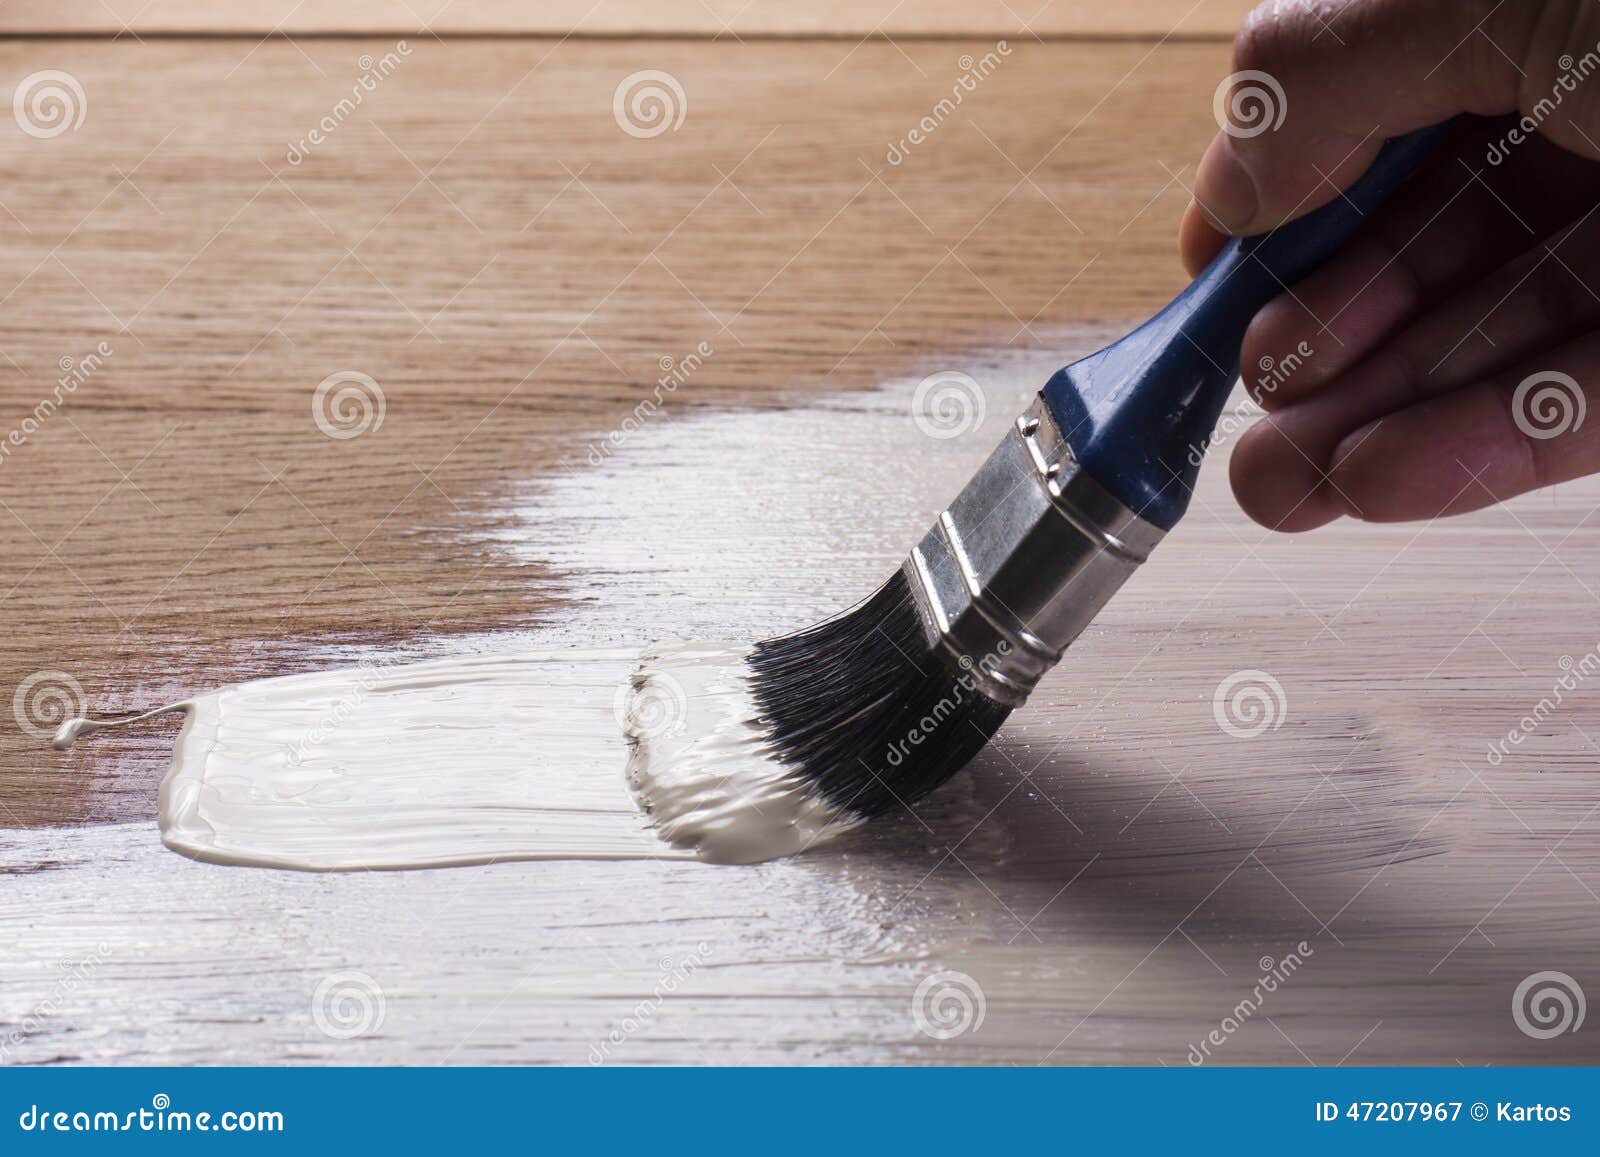 hand holding a brush applying varnish paint